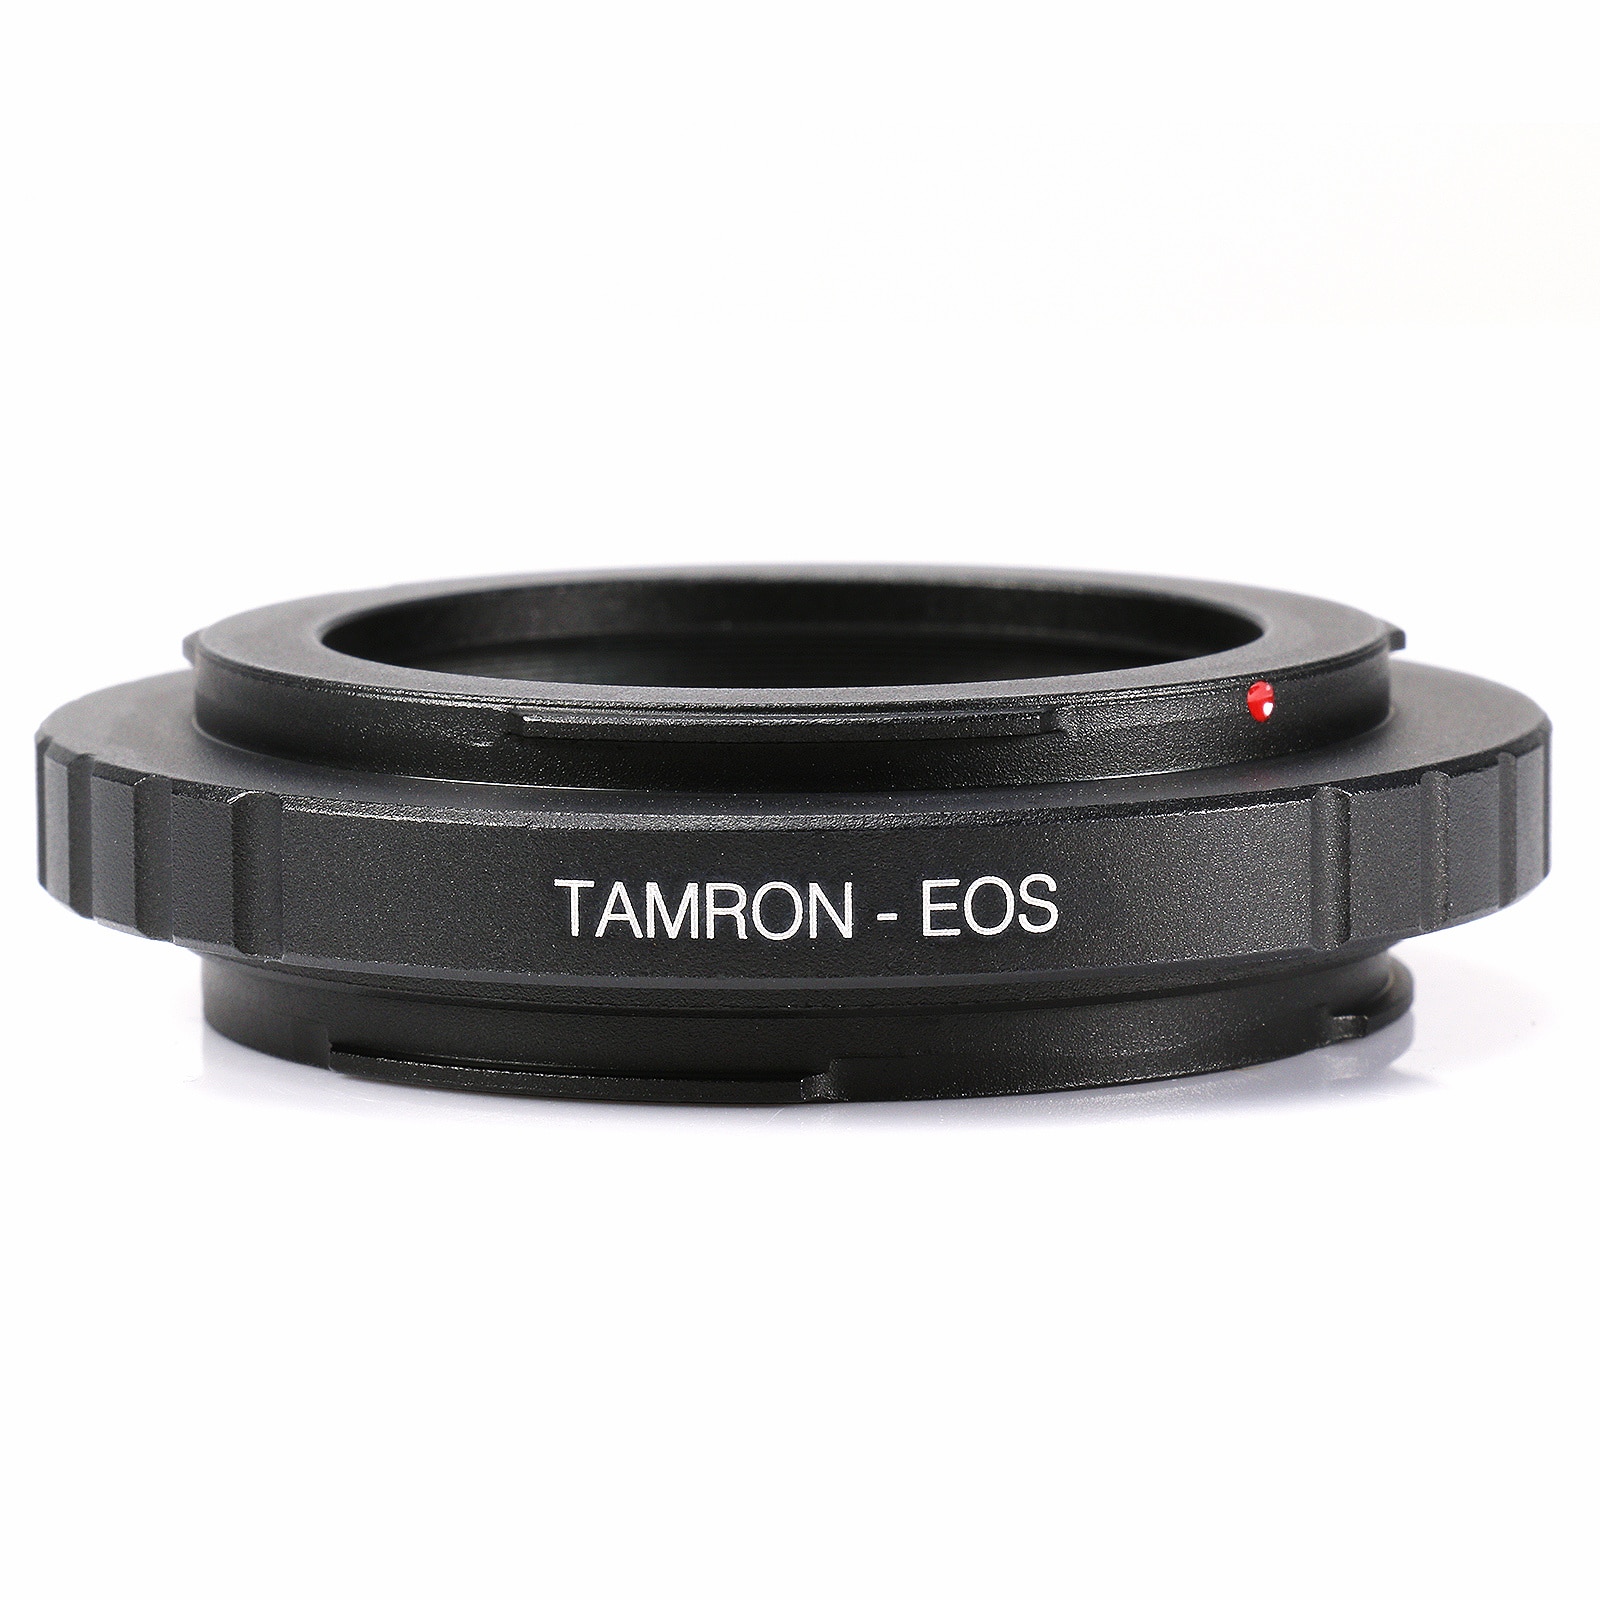 TL-EOS TAMRON-EOS Metalen Lens Adapter Ring Voor Tamron Mount Lens Fit Voor Canon Eos Camera Macro Ring